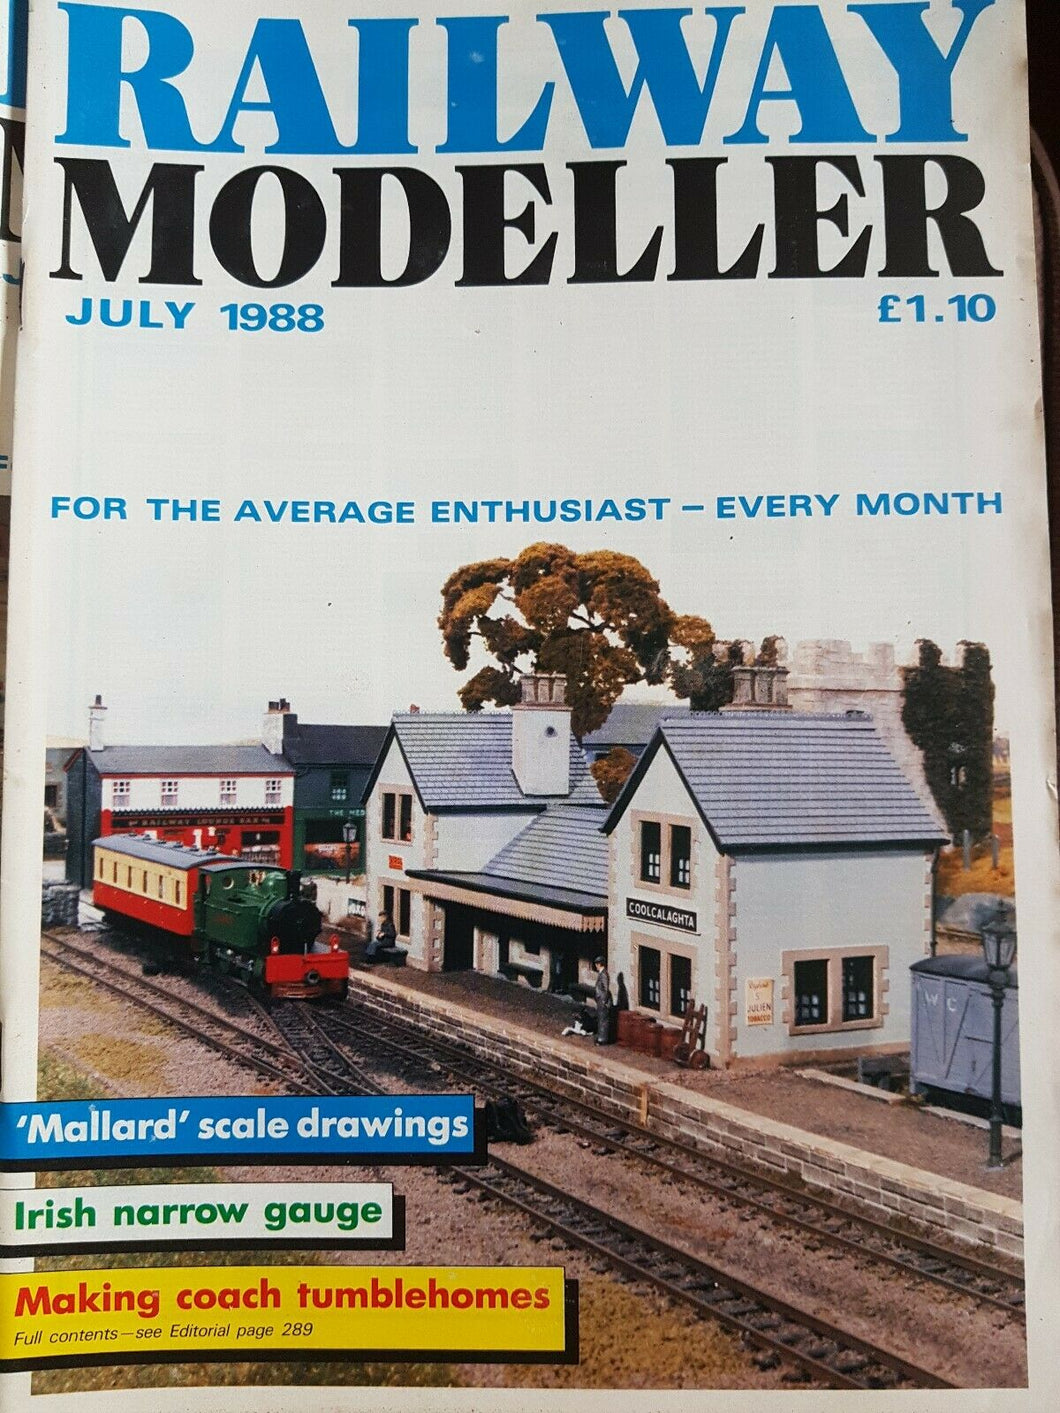 RAILWAY Modeller Magazine July 1988.